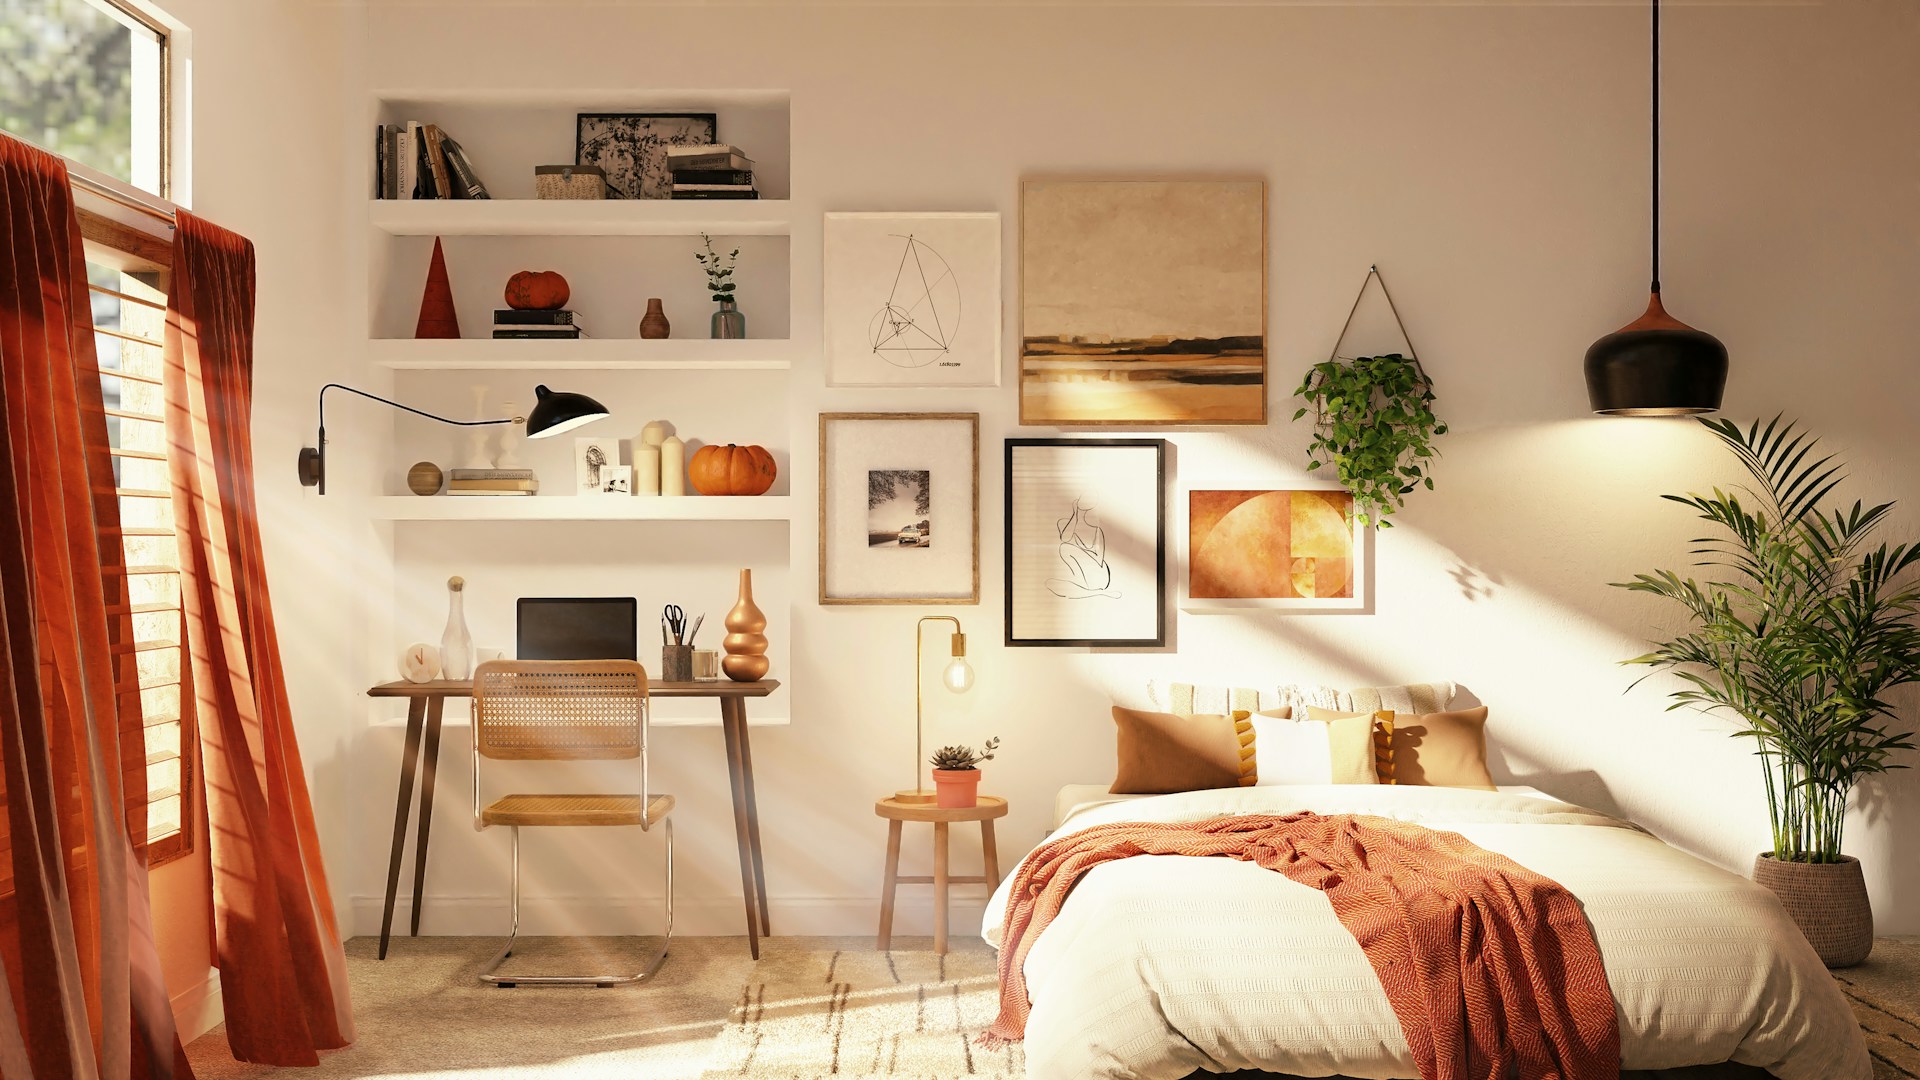 Studio apartment, desk, bed, art on walls and shelves. Image by Unsplash